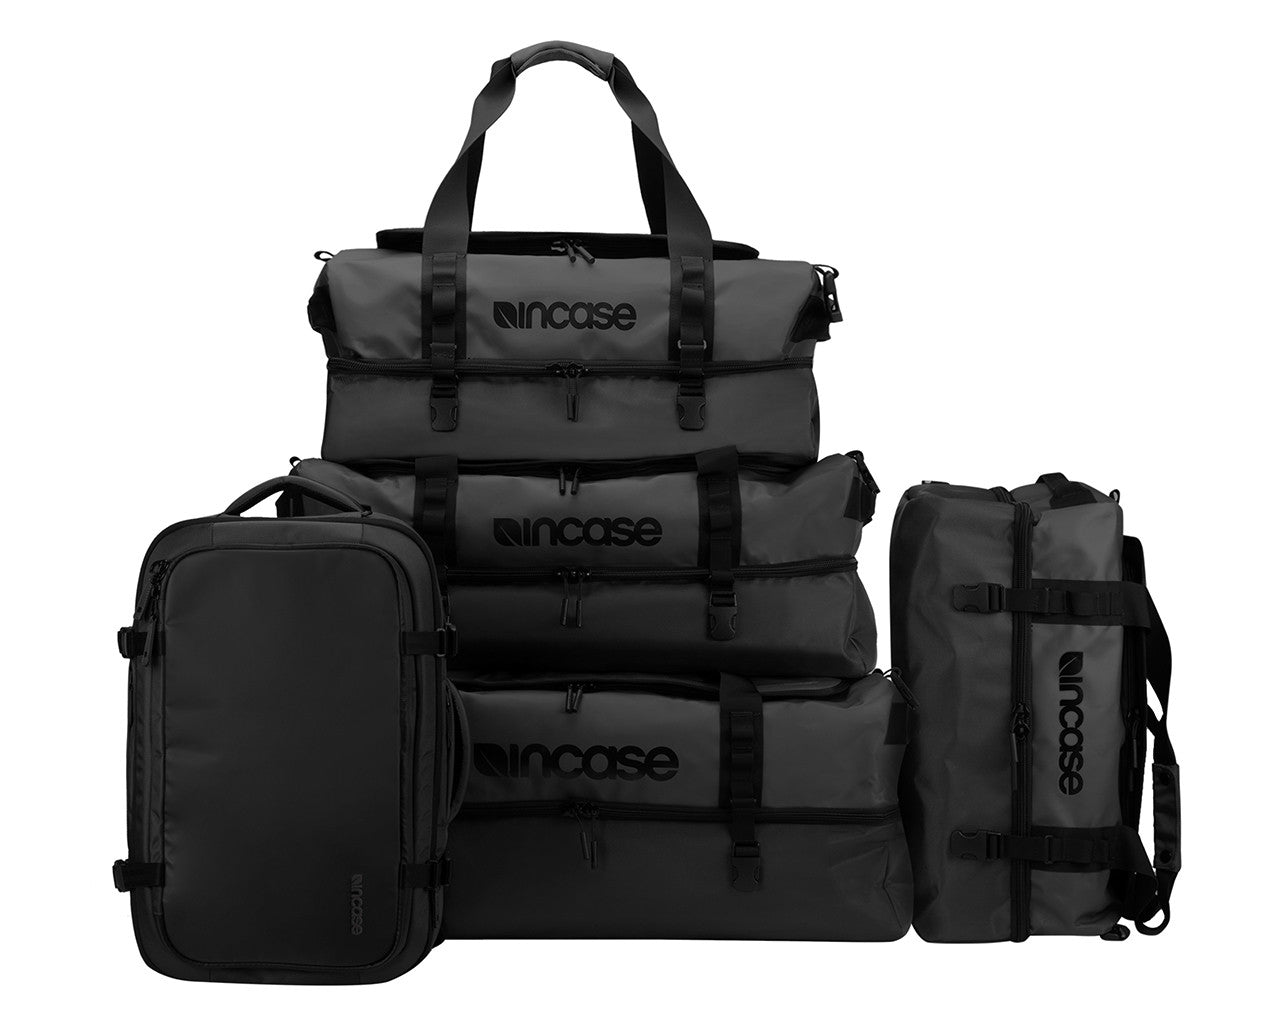 Incase Eo Travel Backpack Gadget Flow